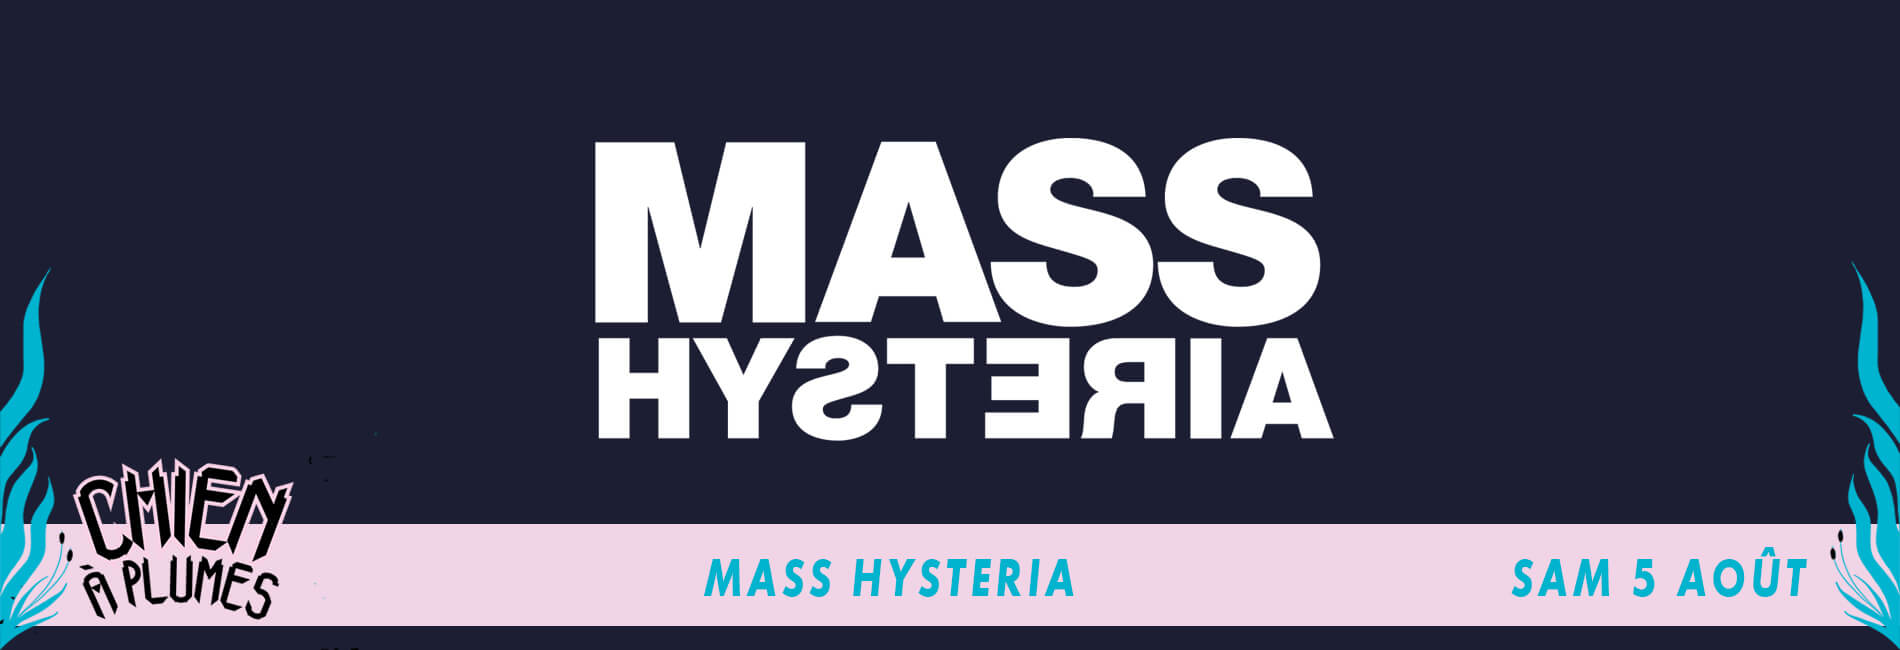 MASS HYSTERIA_CHIENAPLUMES